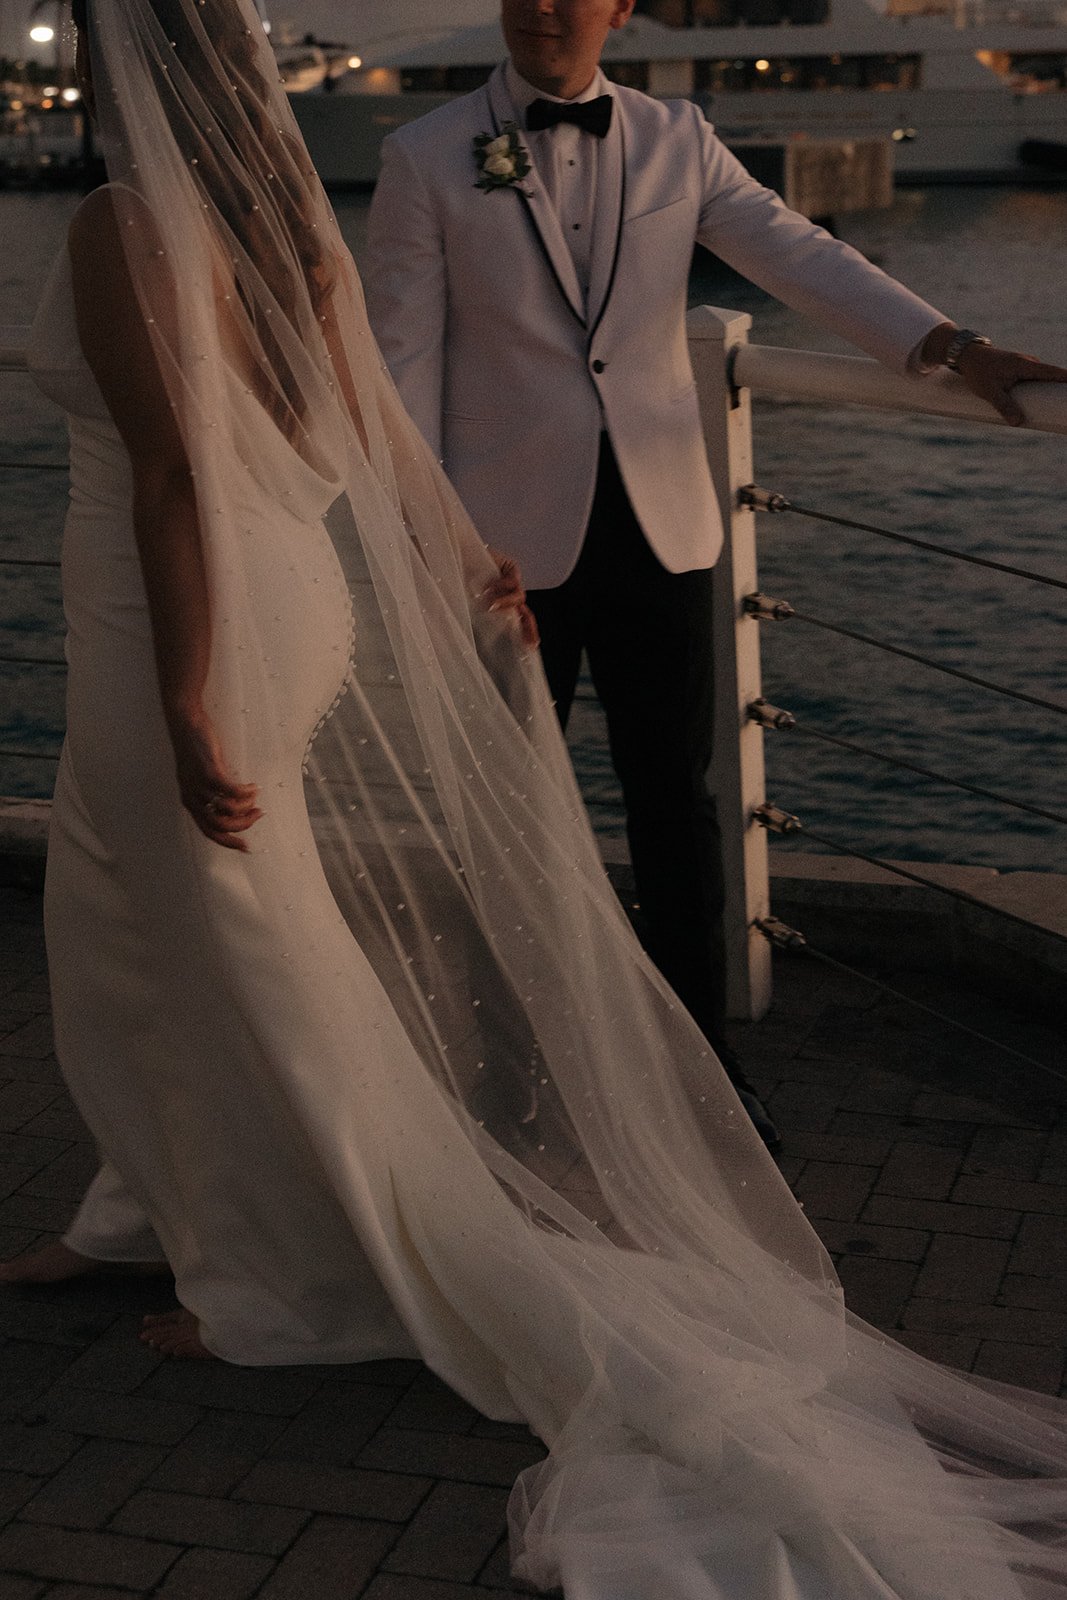 16 AUDUBON HOUSE KEY WEST - KEY WEST WEDDING PLANNER - FLORIDA KEYS WEDDING PLANNER - RACHEL FOS BENNER -.jpg